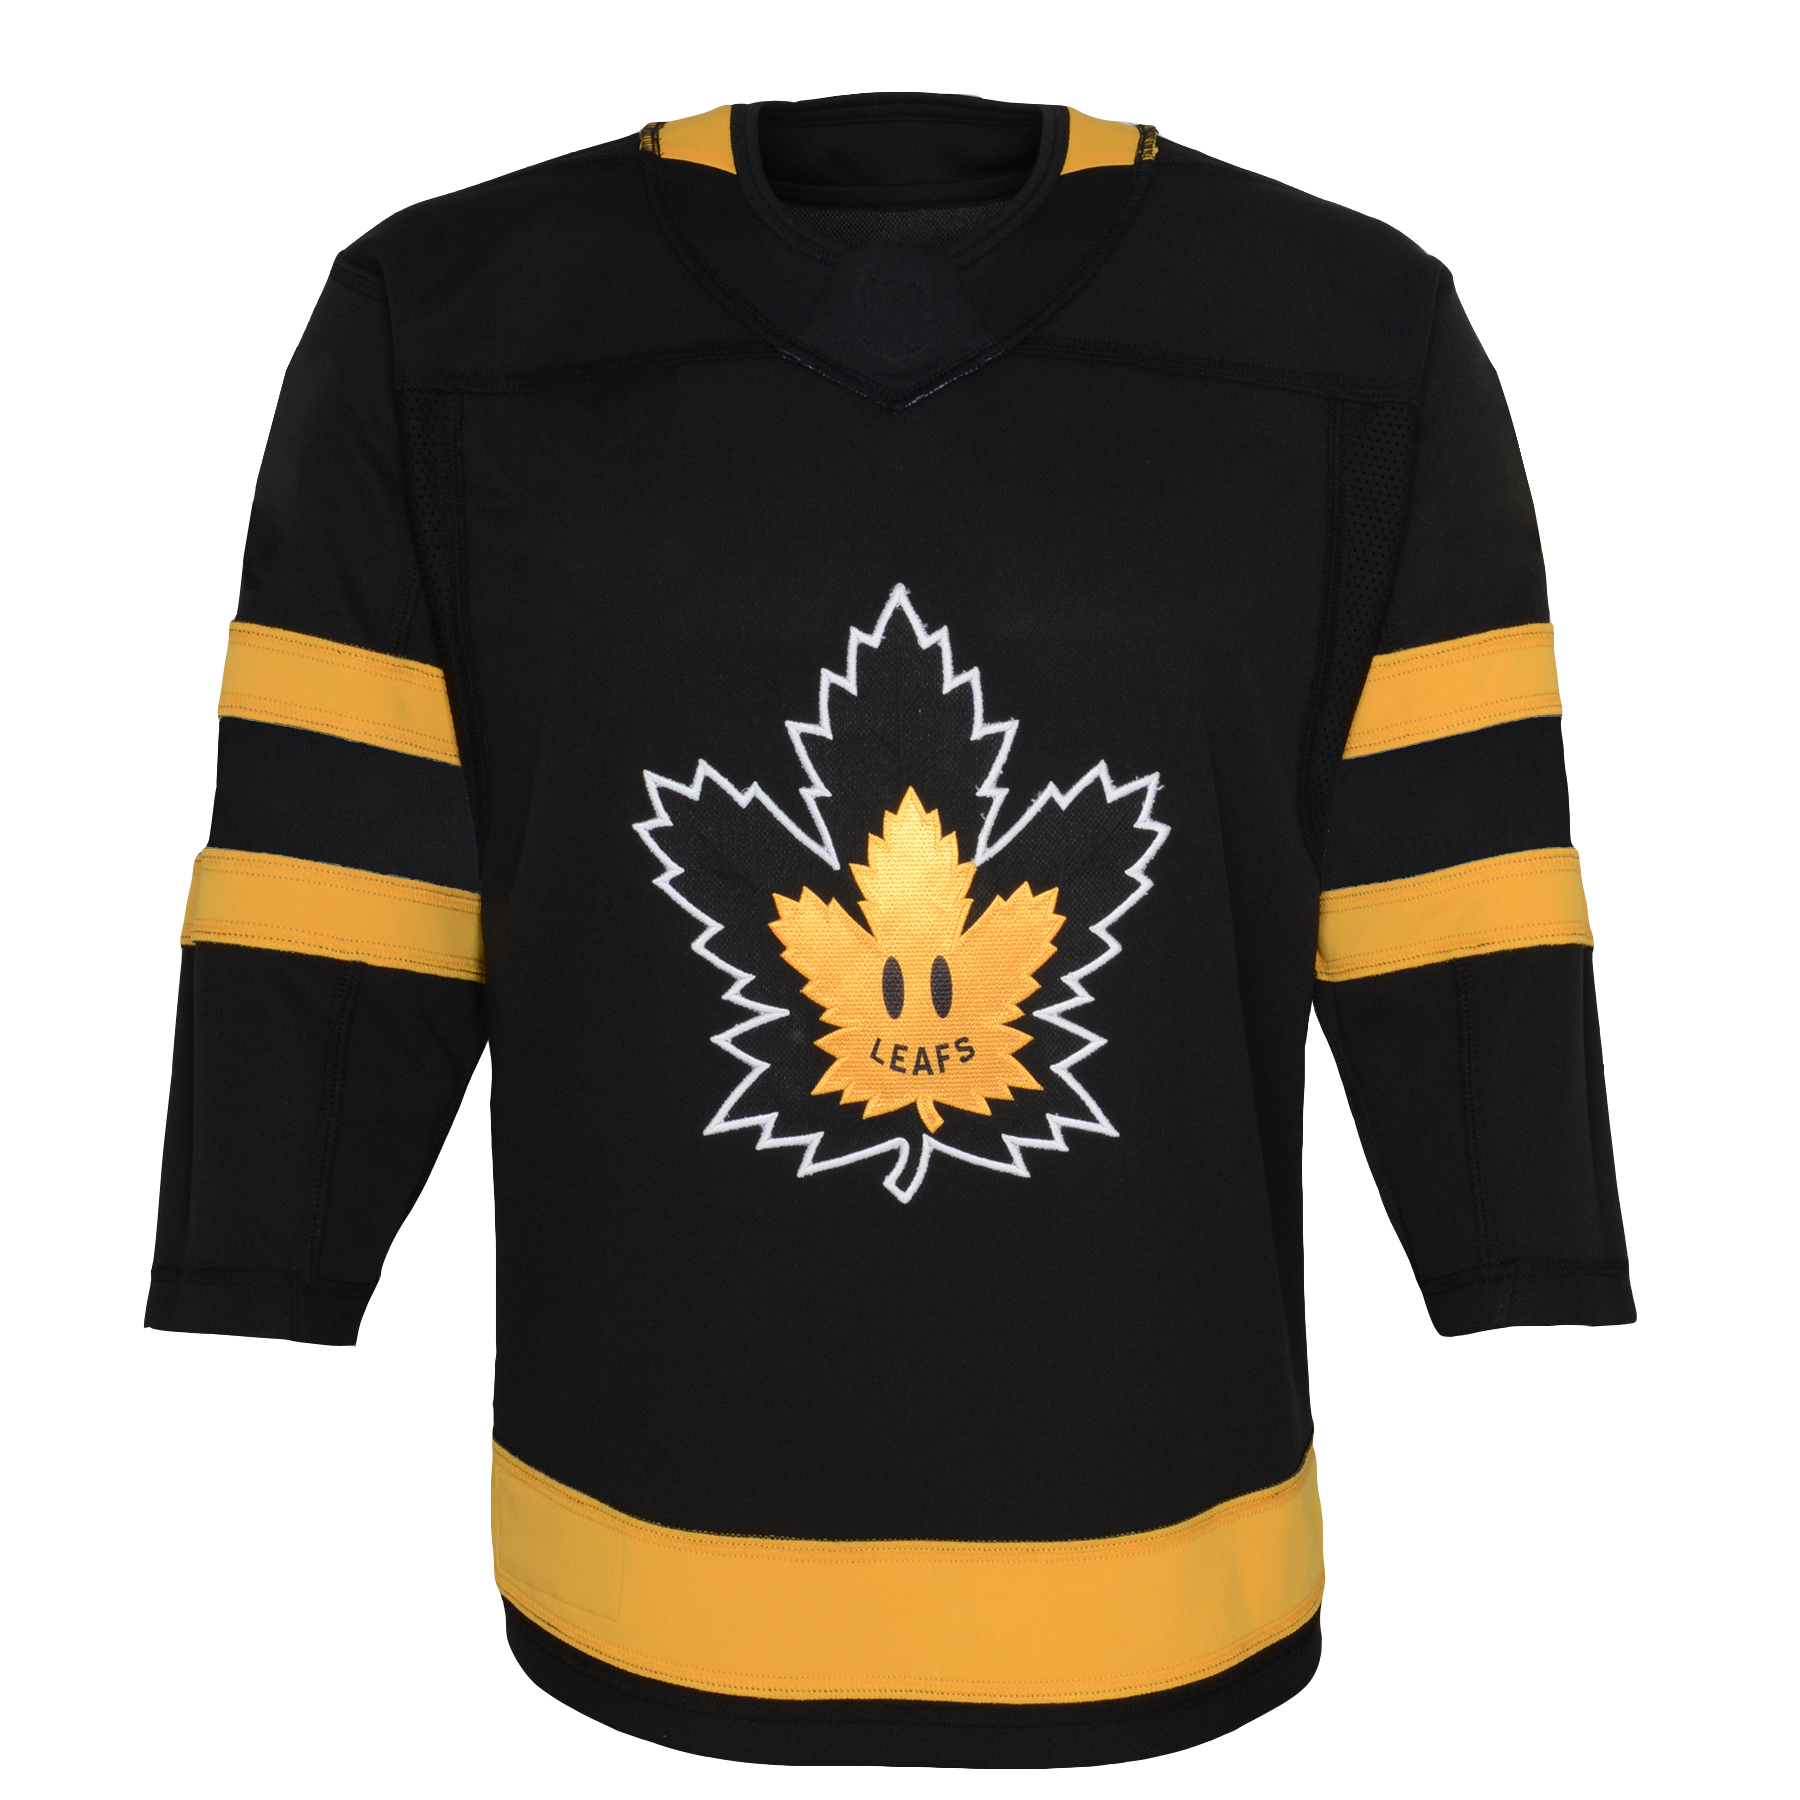 Discounted Toronto Maple Leafs Gear, Maple Leafs Apparel On Sale